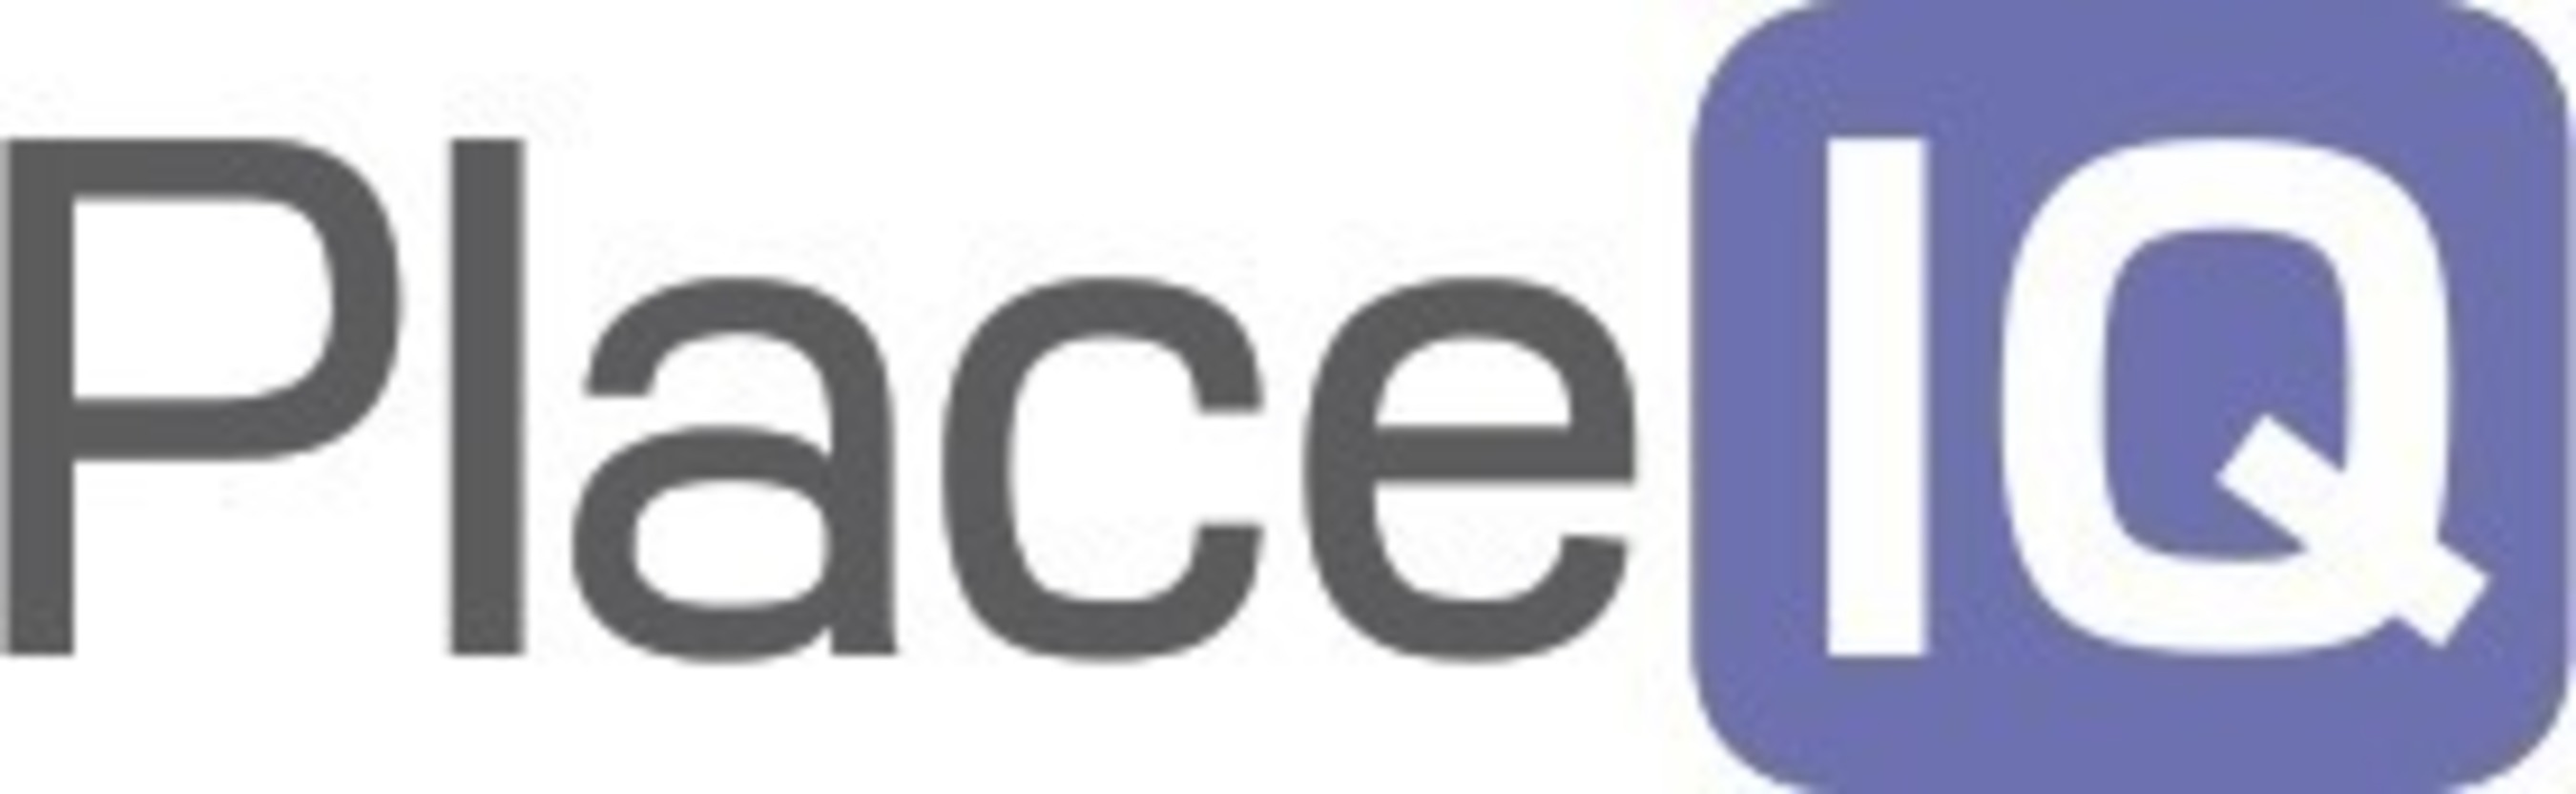 PlaceIQ Logo
 (PRNewsFoto/PlaceIQ)